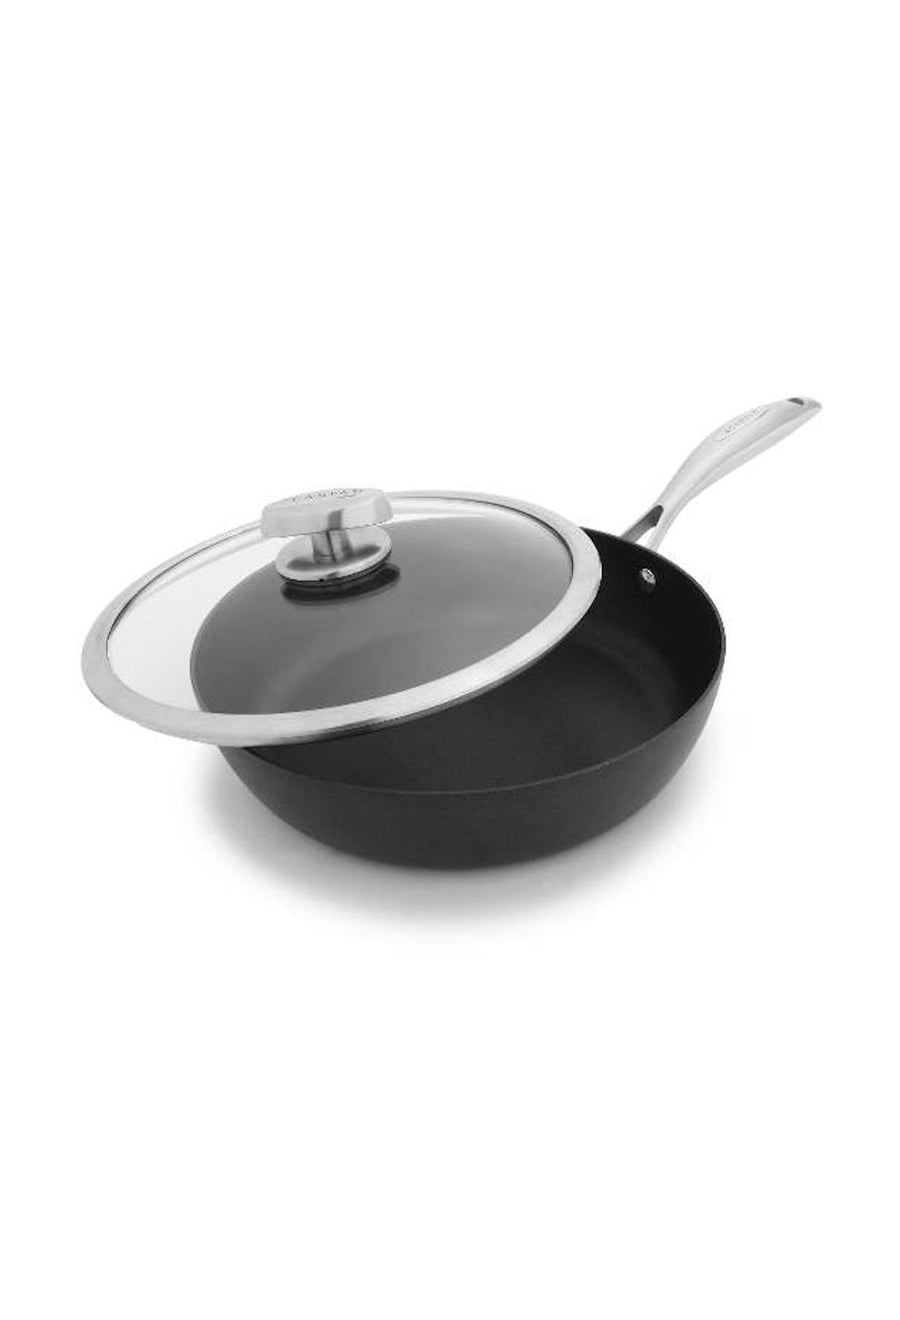 Scanpan Pro IQ Saute Pan with lid